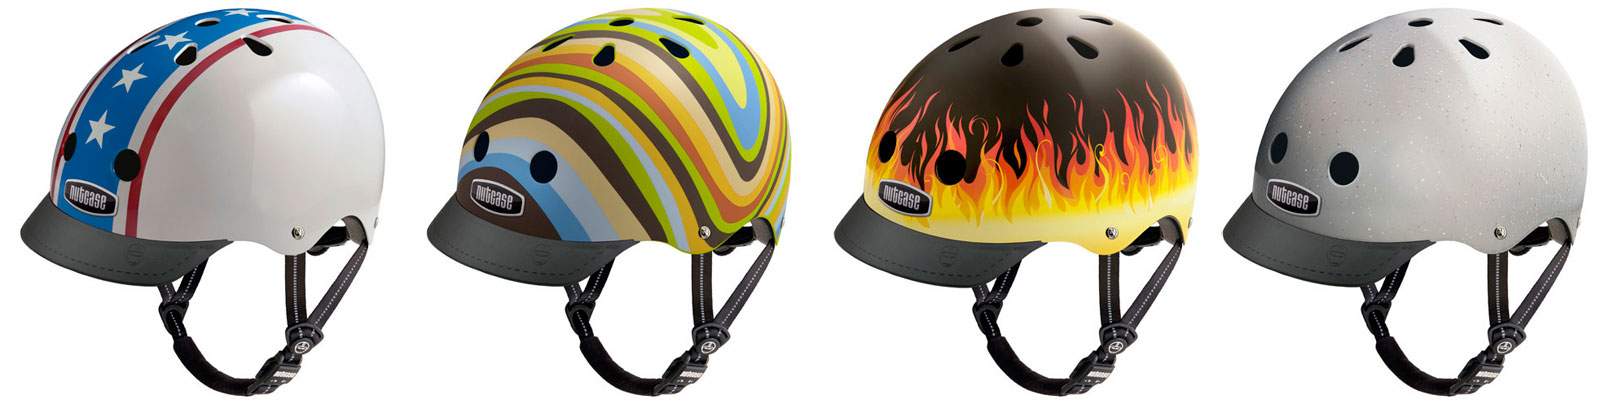 Vrijgevigheid Weven D.w.z New Gen3 Hardshell Urban Cycling Helmets From Nutcase - Bikerumor